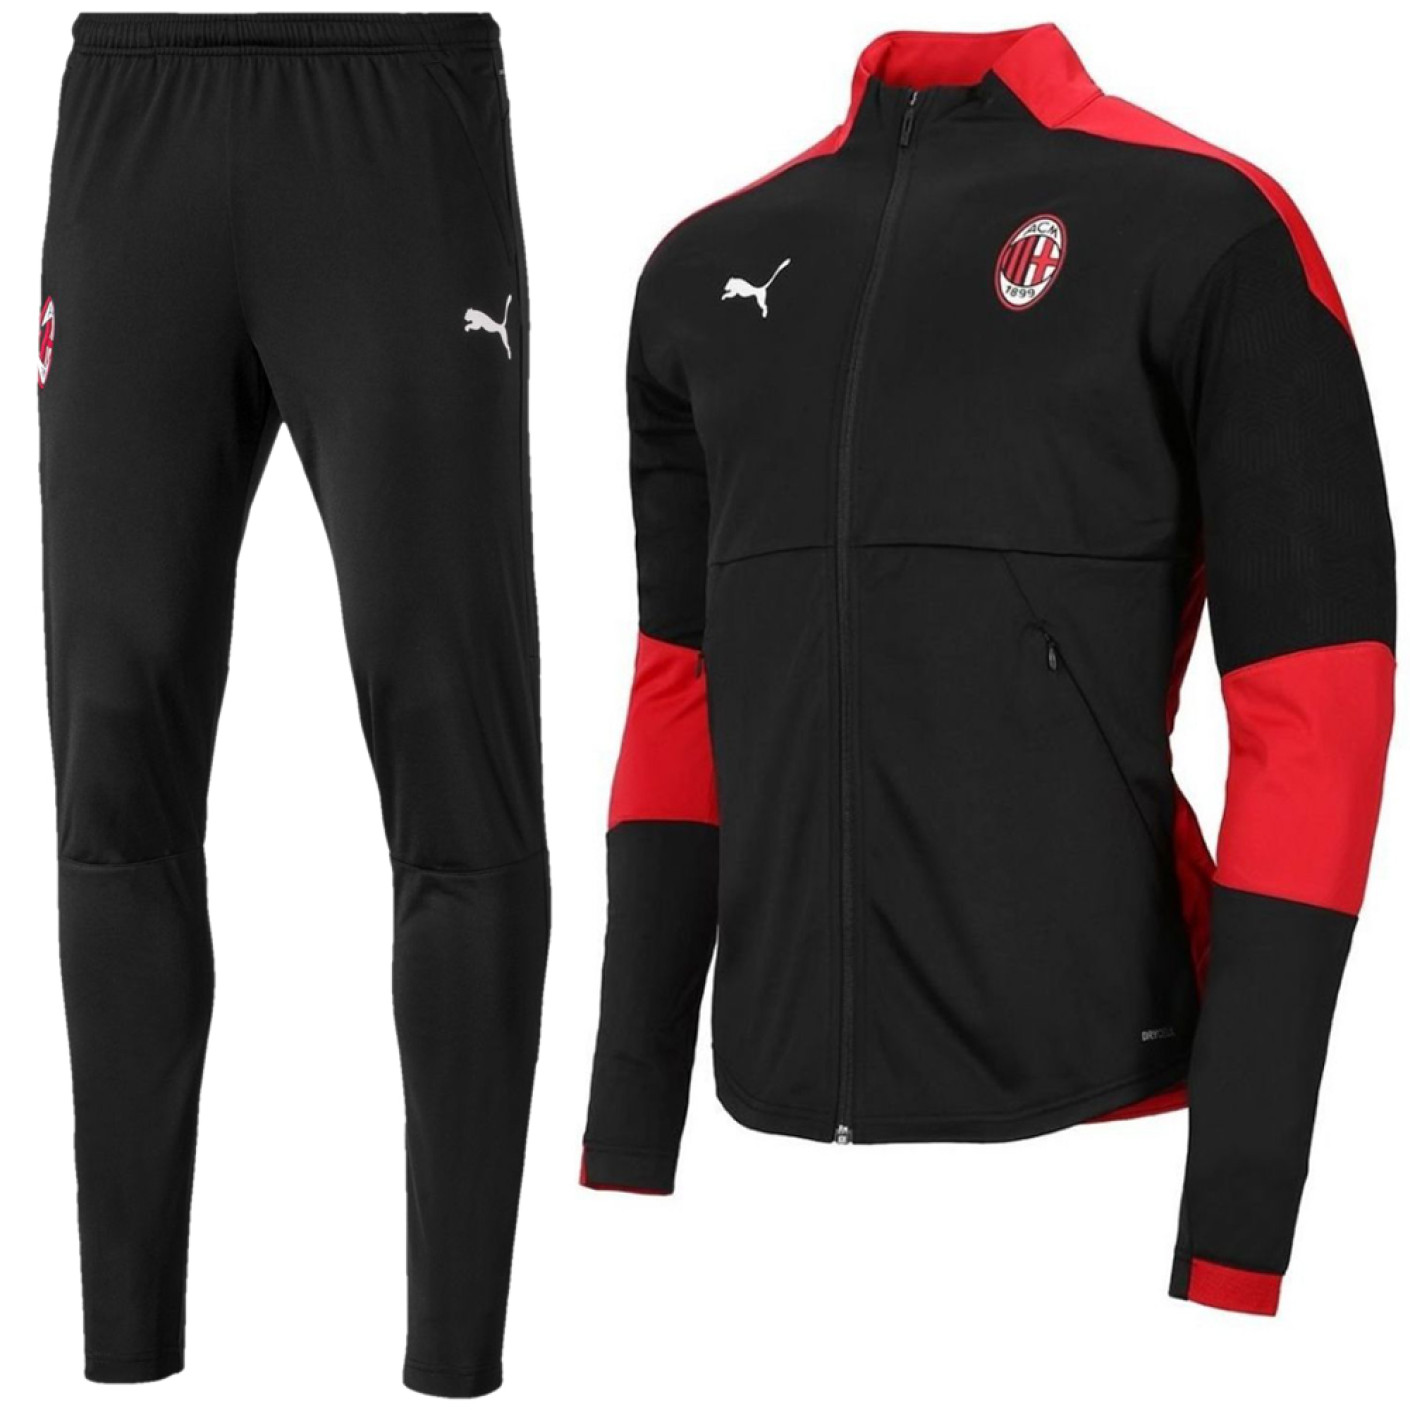 Puma AC Milan Full-Zip Trainingspak 2020-2021 Zwart Rood